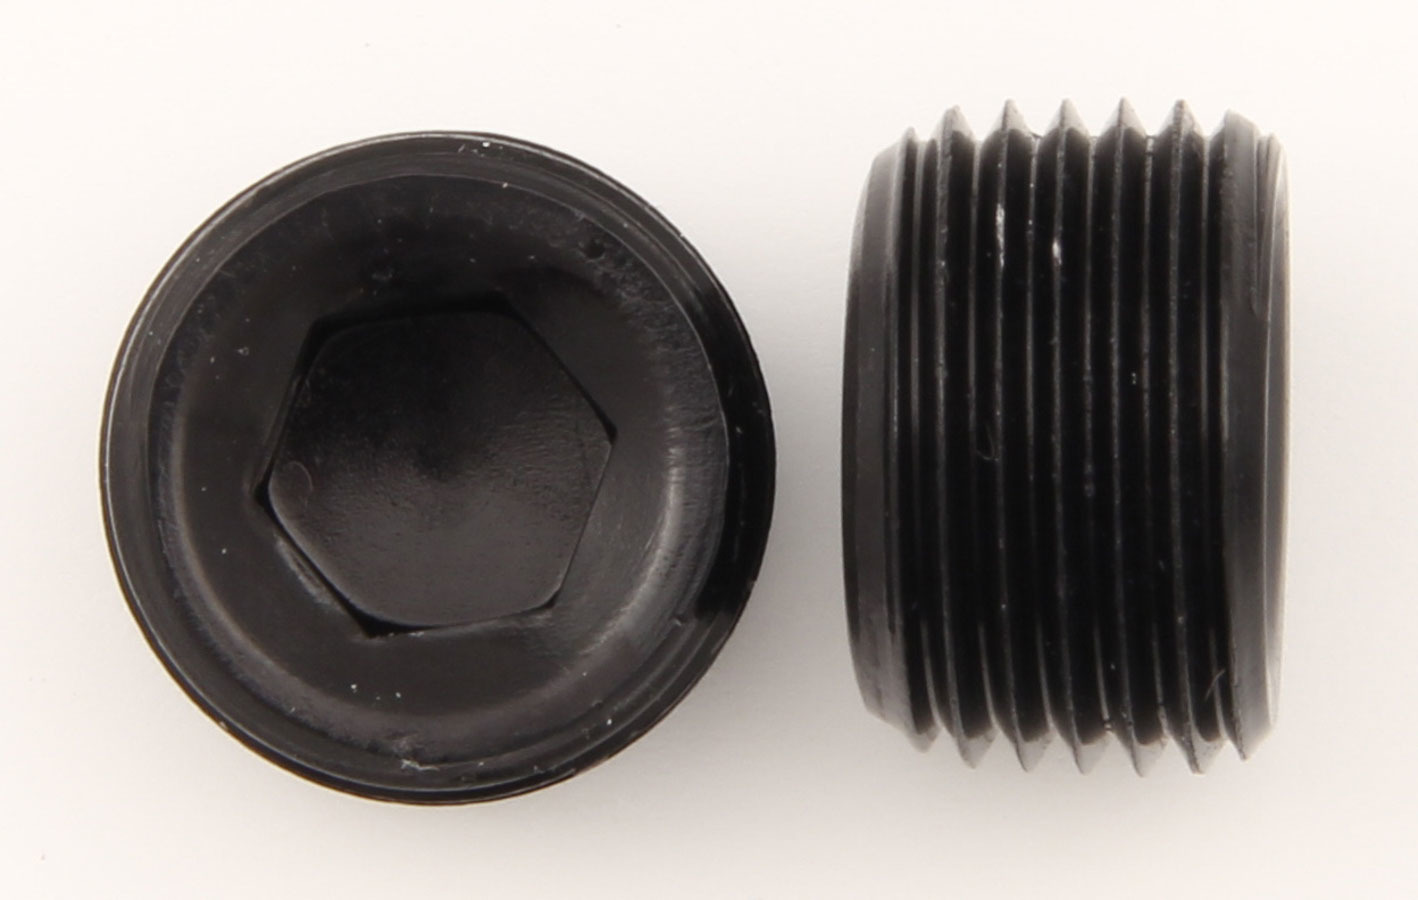 1/8in Allen Head Pipe Plug (2pk) Black